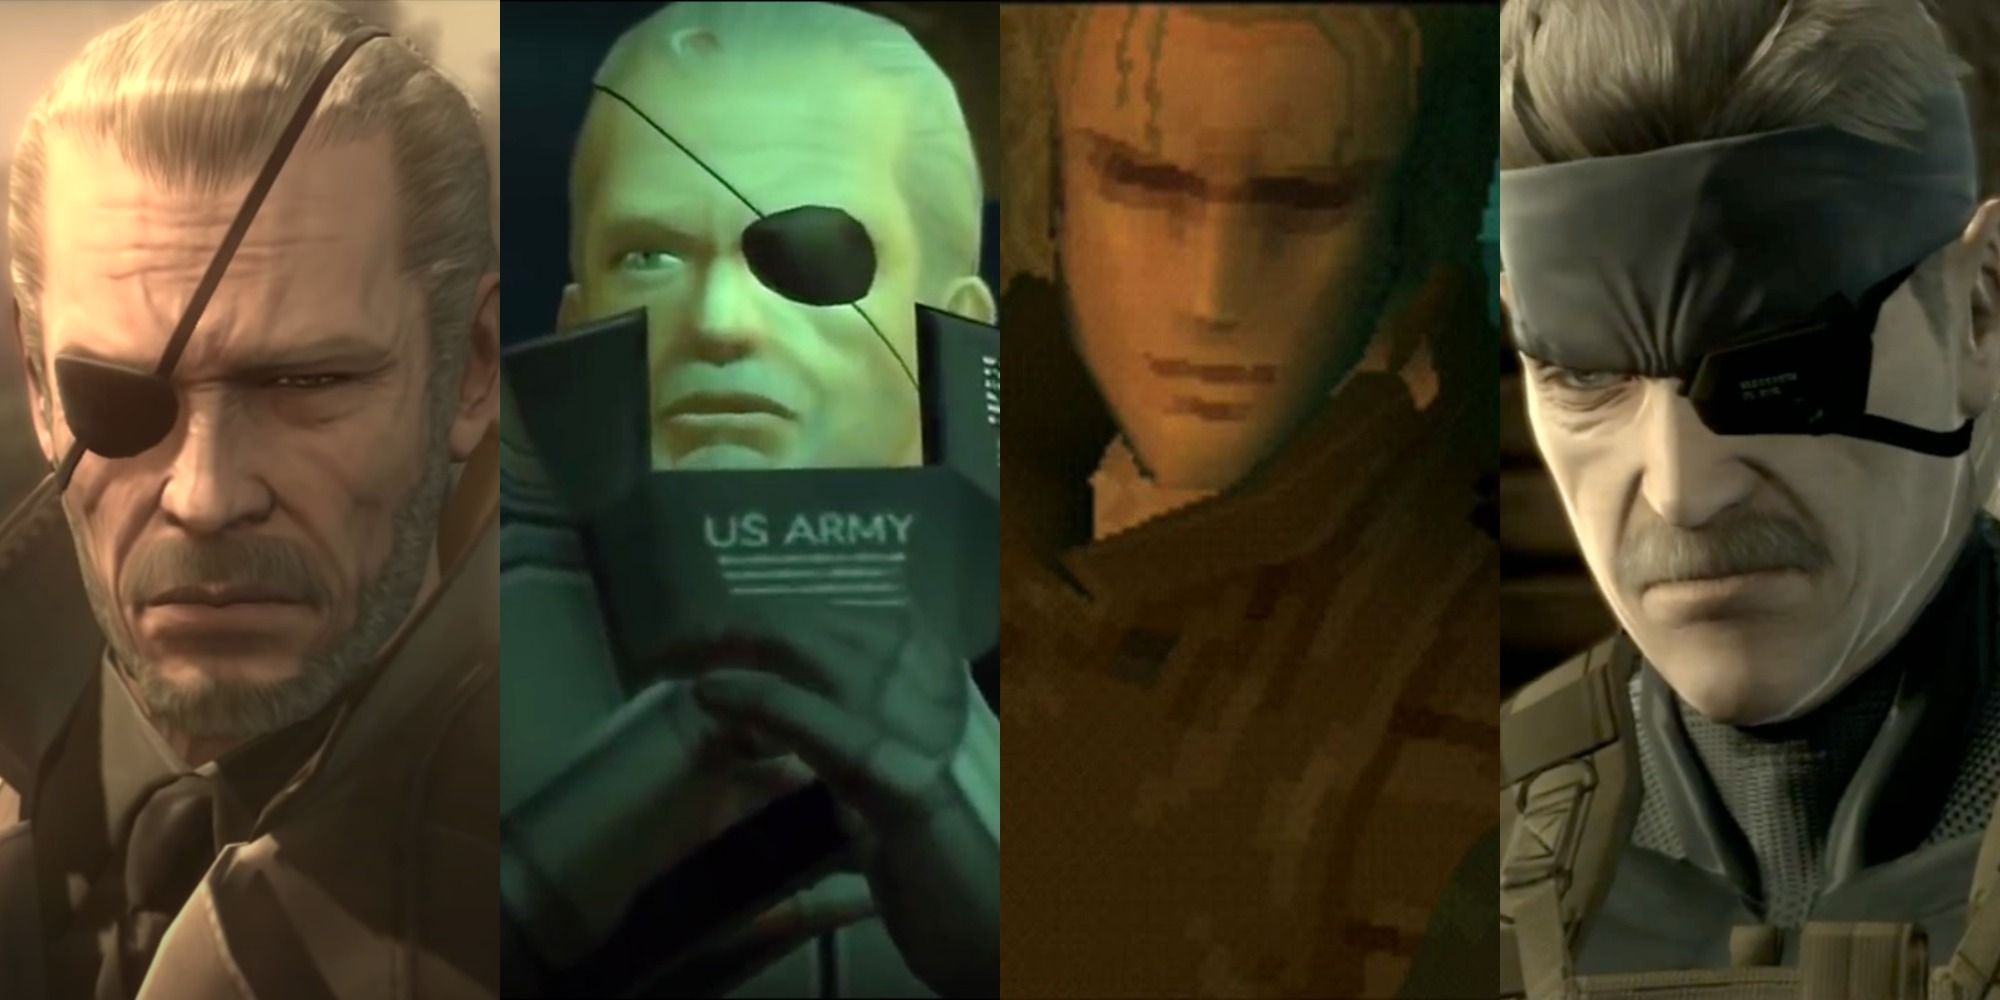 Metal Gear Solid Split Image Of Big Boss, Solidus Snake, Liquid Snake, and Old Snake